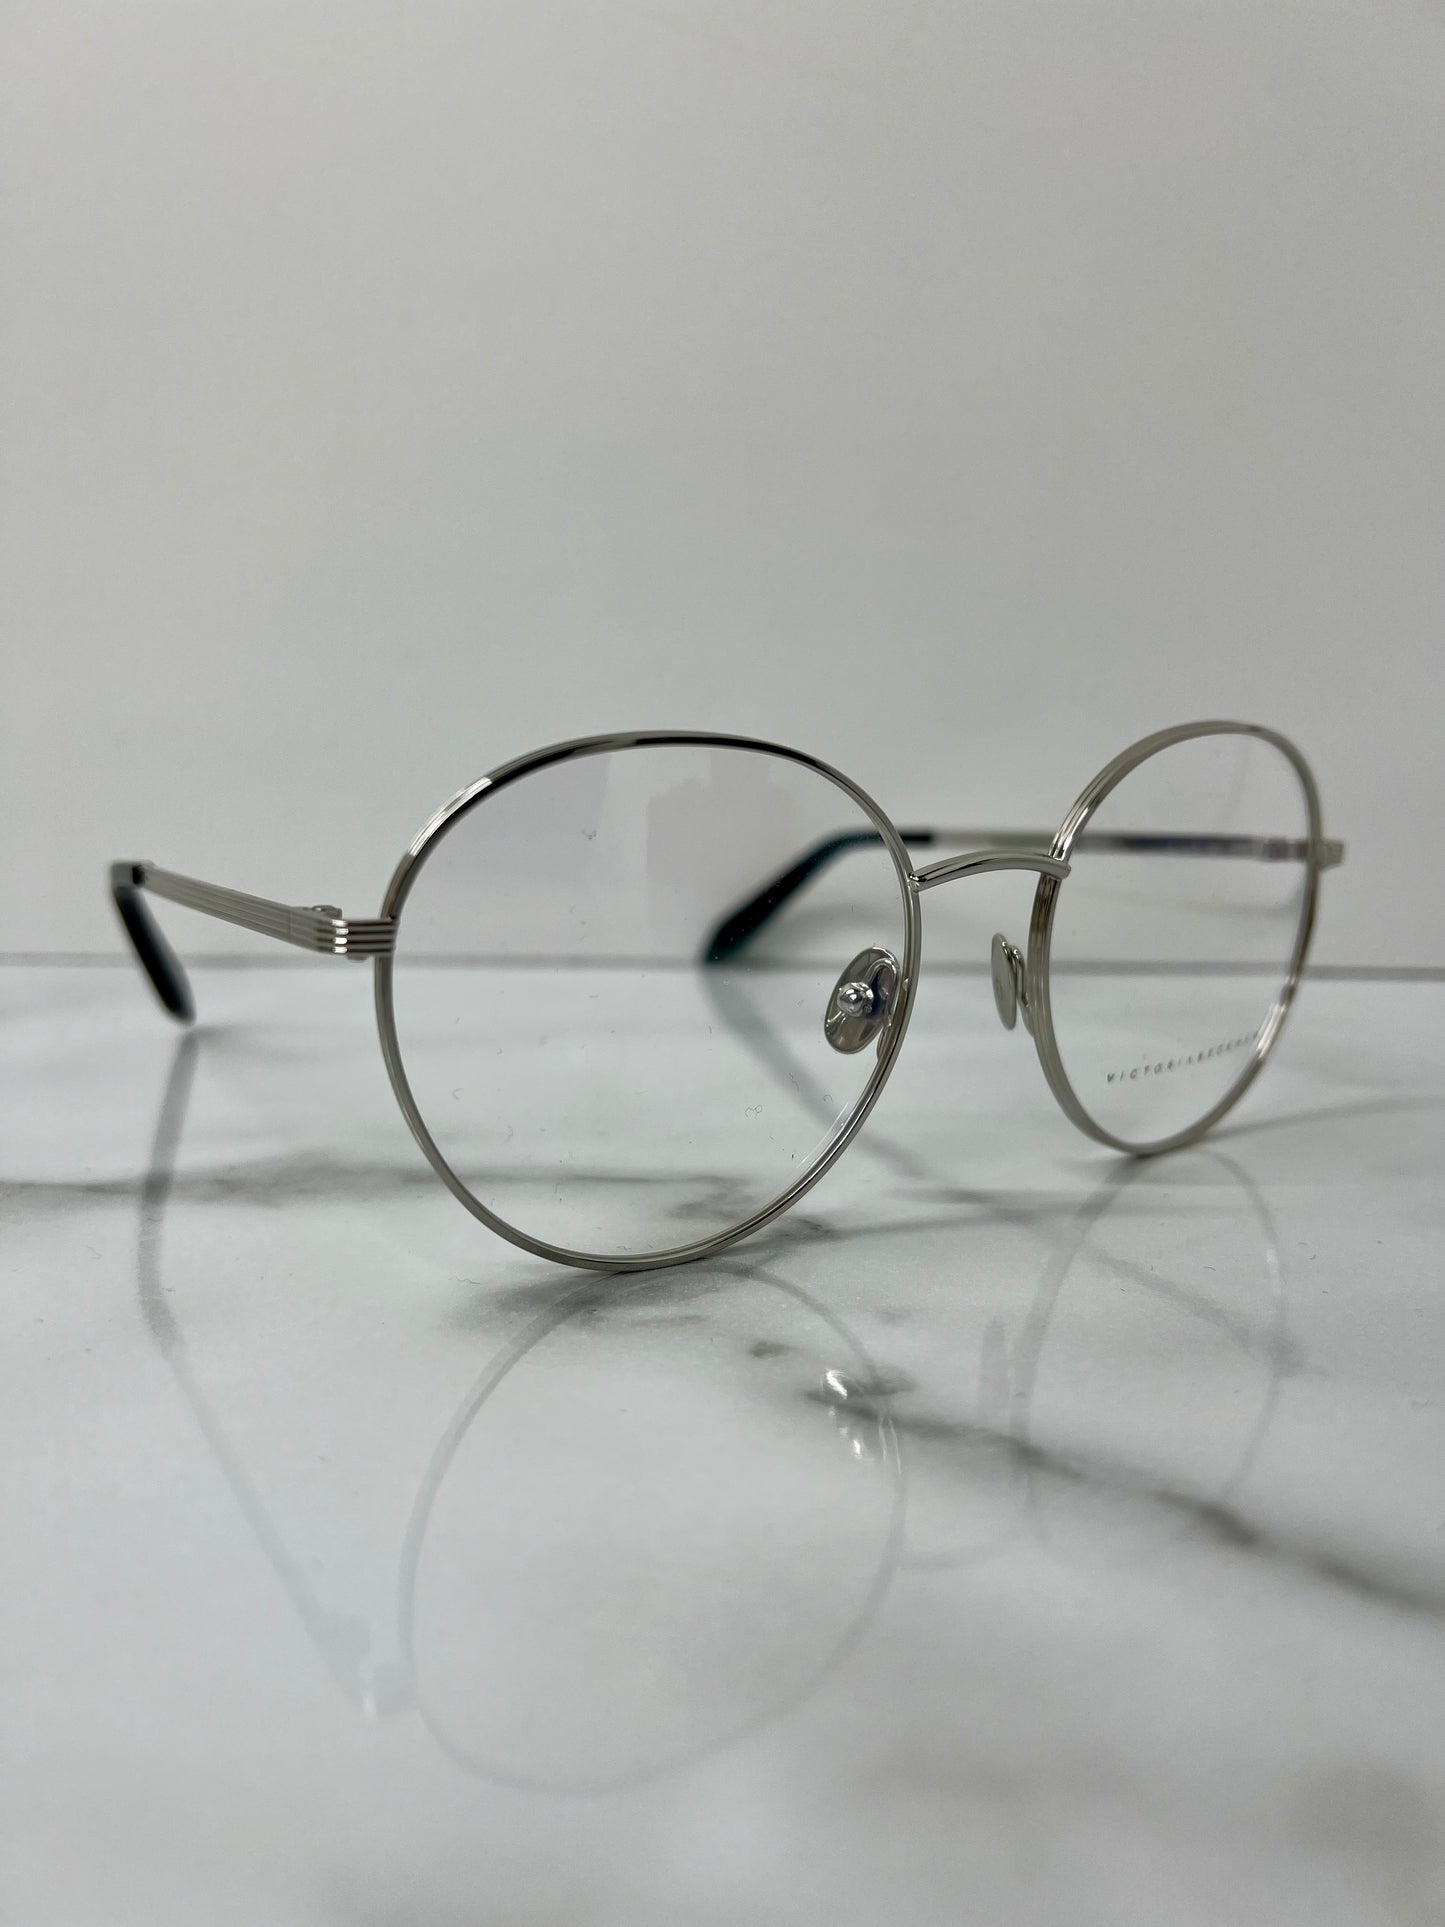 Victoria Beckham Glasses Frames Optical Women Silver Black Eyeglasses VBOPT228